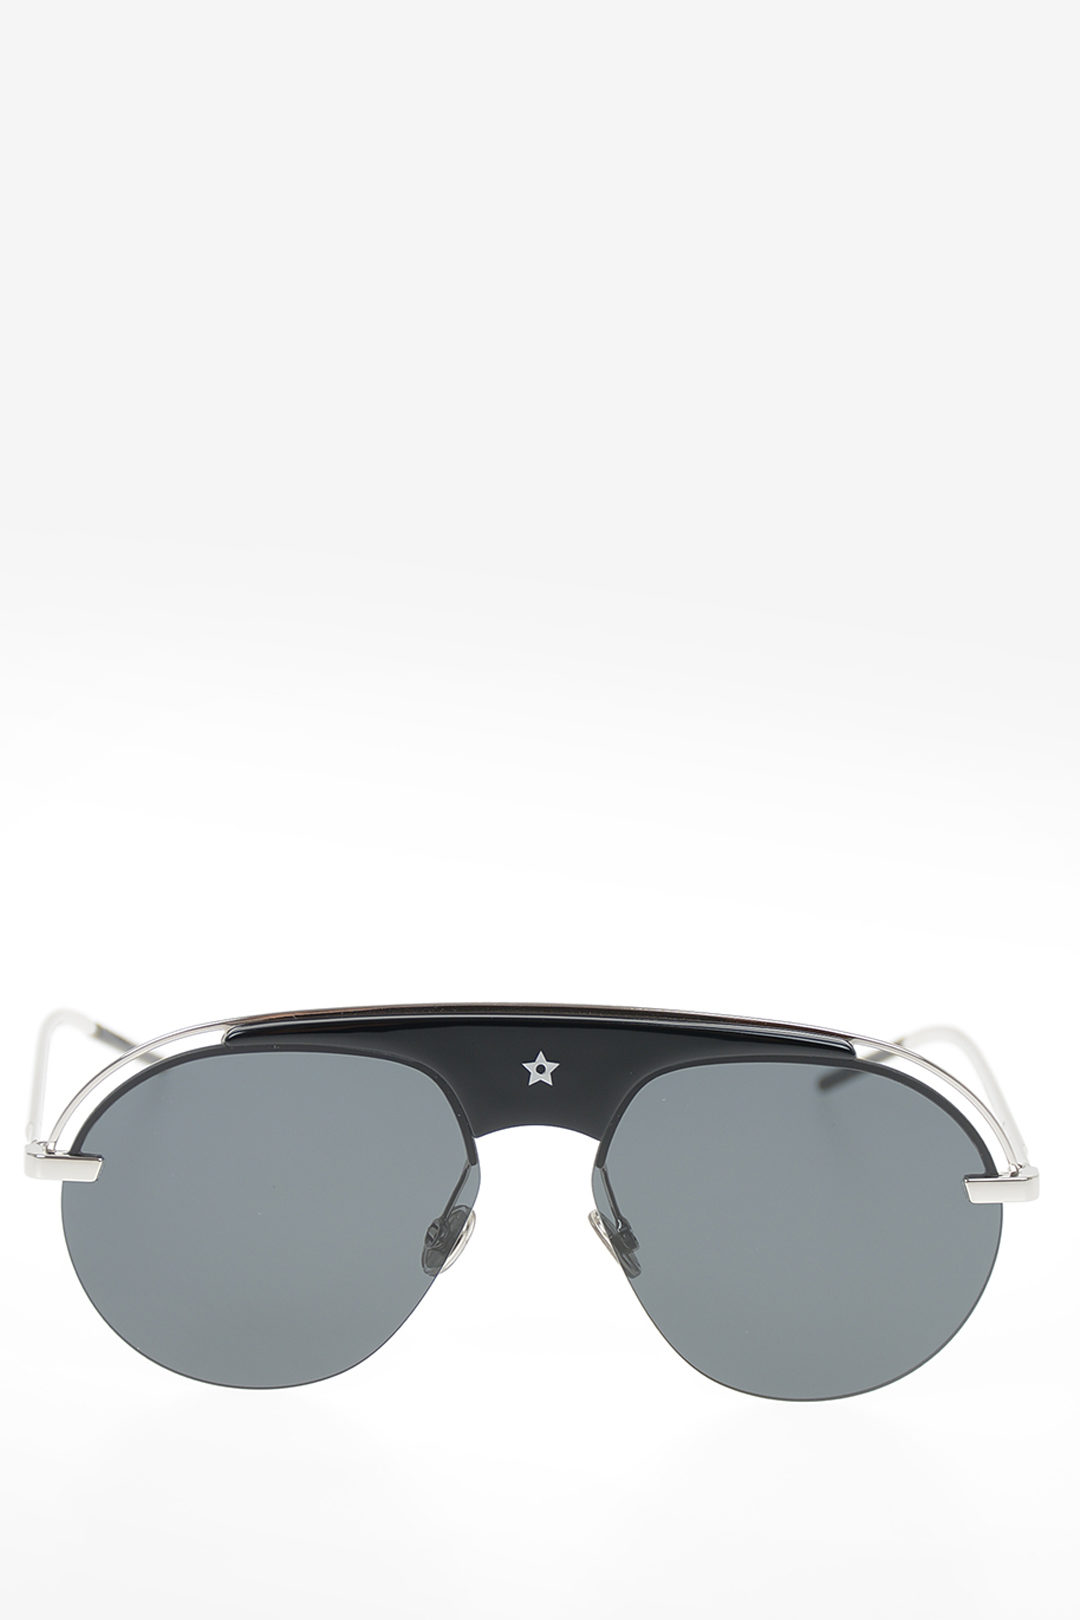 Dior Dark Grey Pilot Ladies Sunglasses DIOREVOLUTION 2M22K  Walmartcom